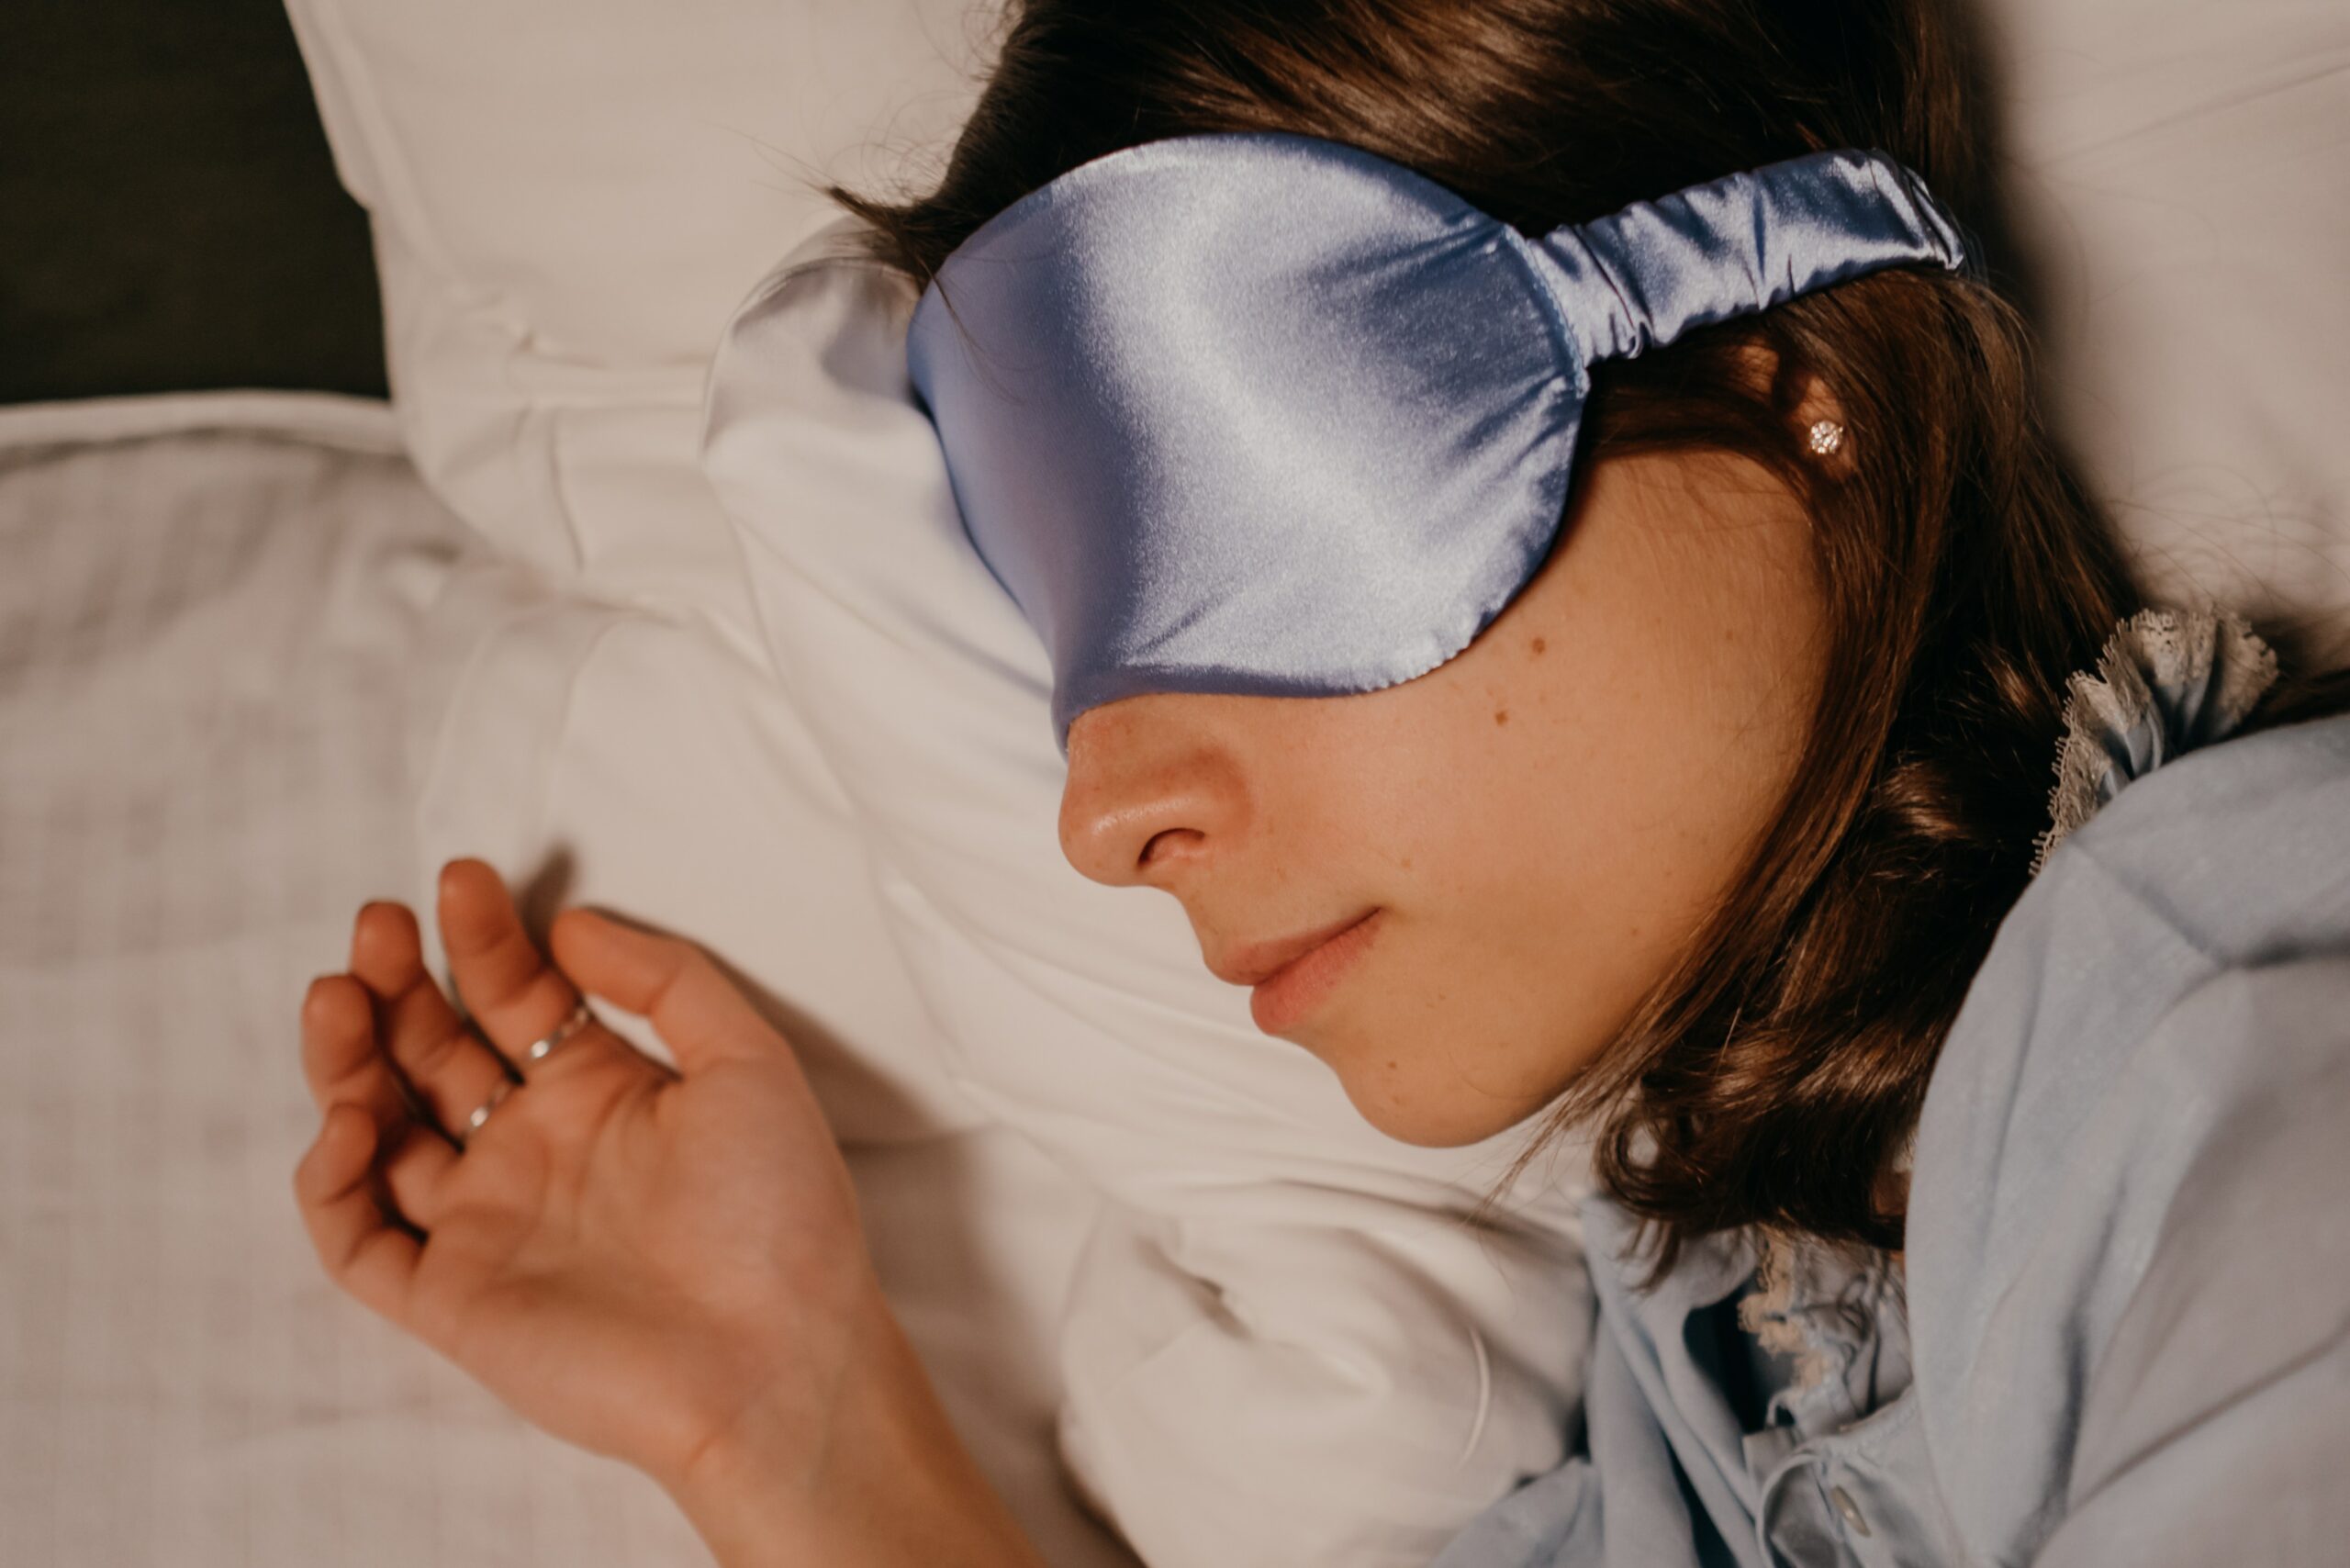 wear an eye mask when sleeping away from home